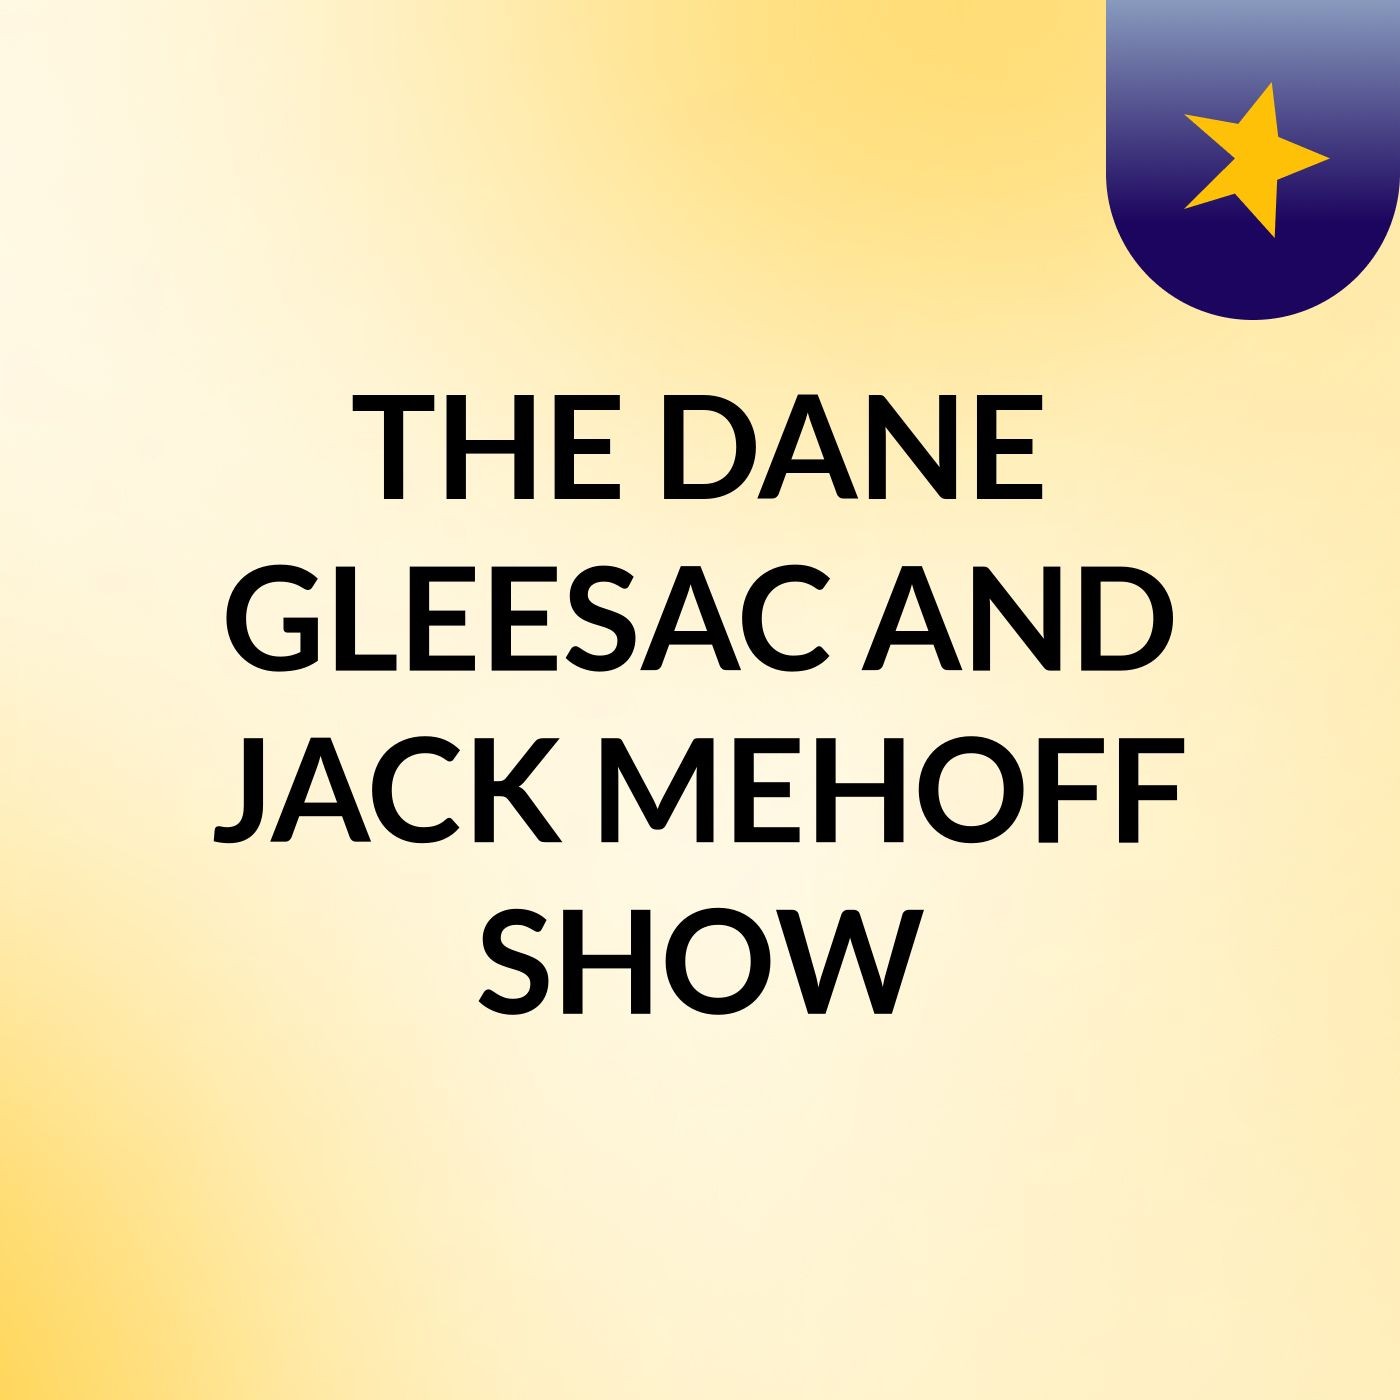 THE DANE GLEESAC AND JACK MEHOFF SHOW